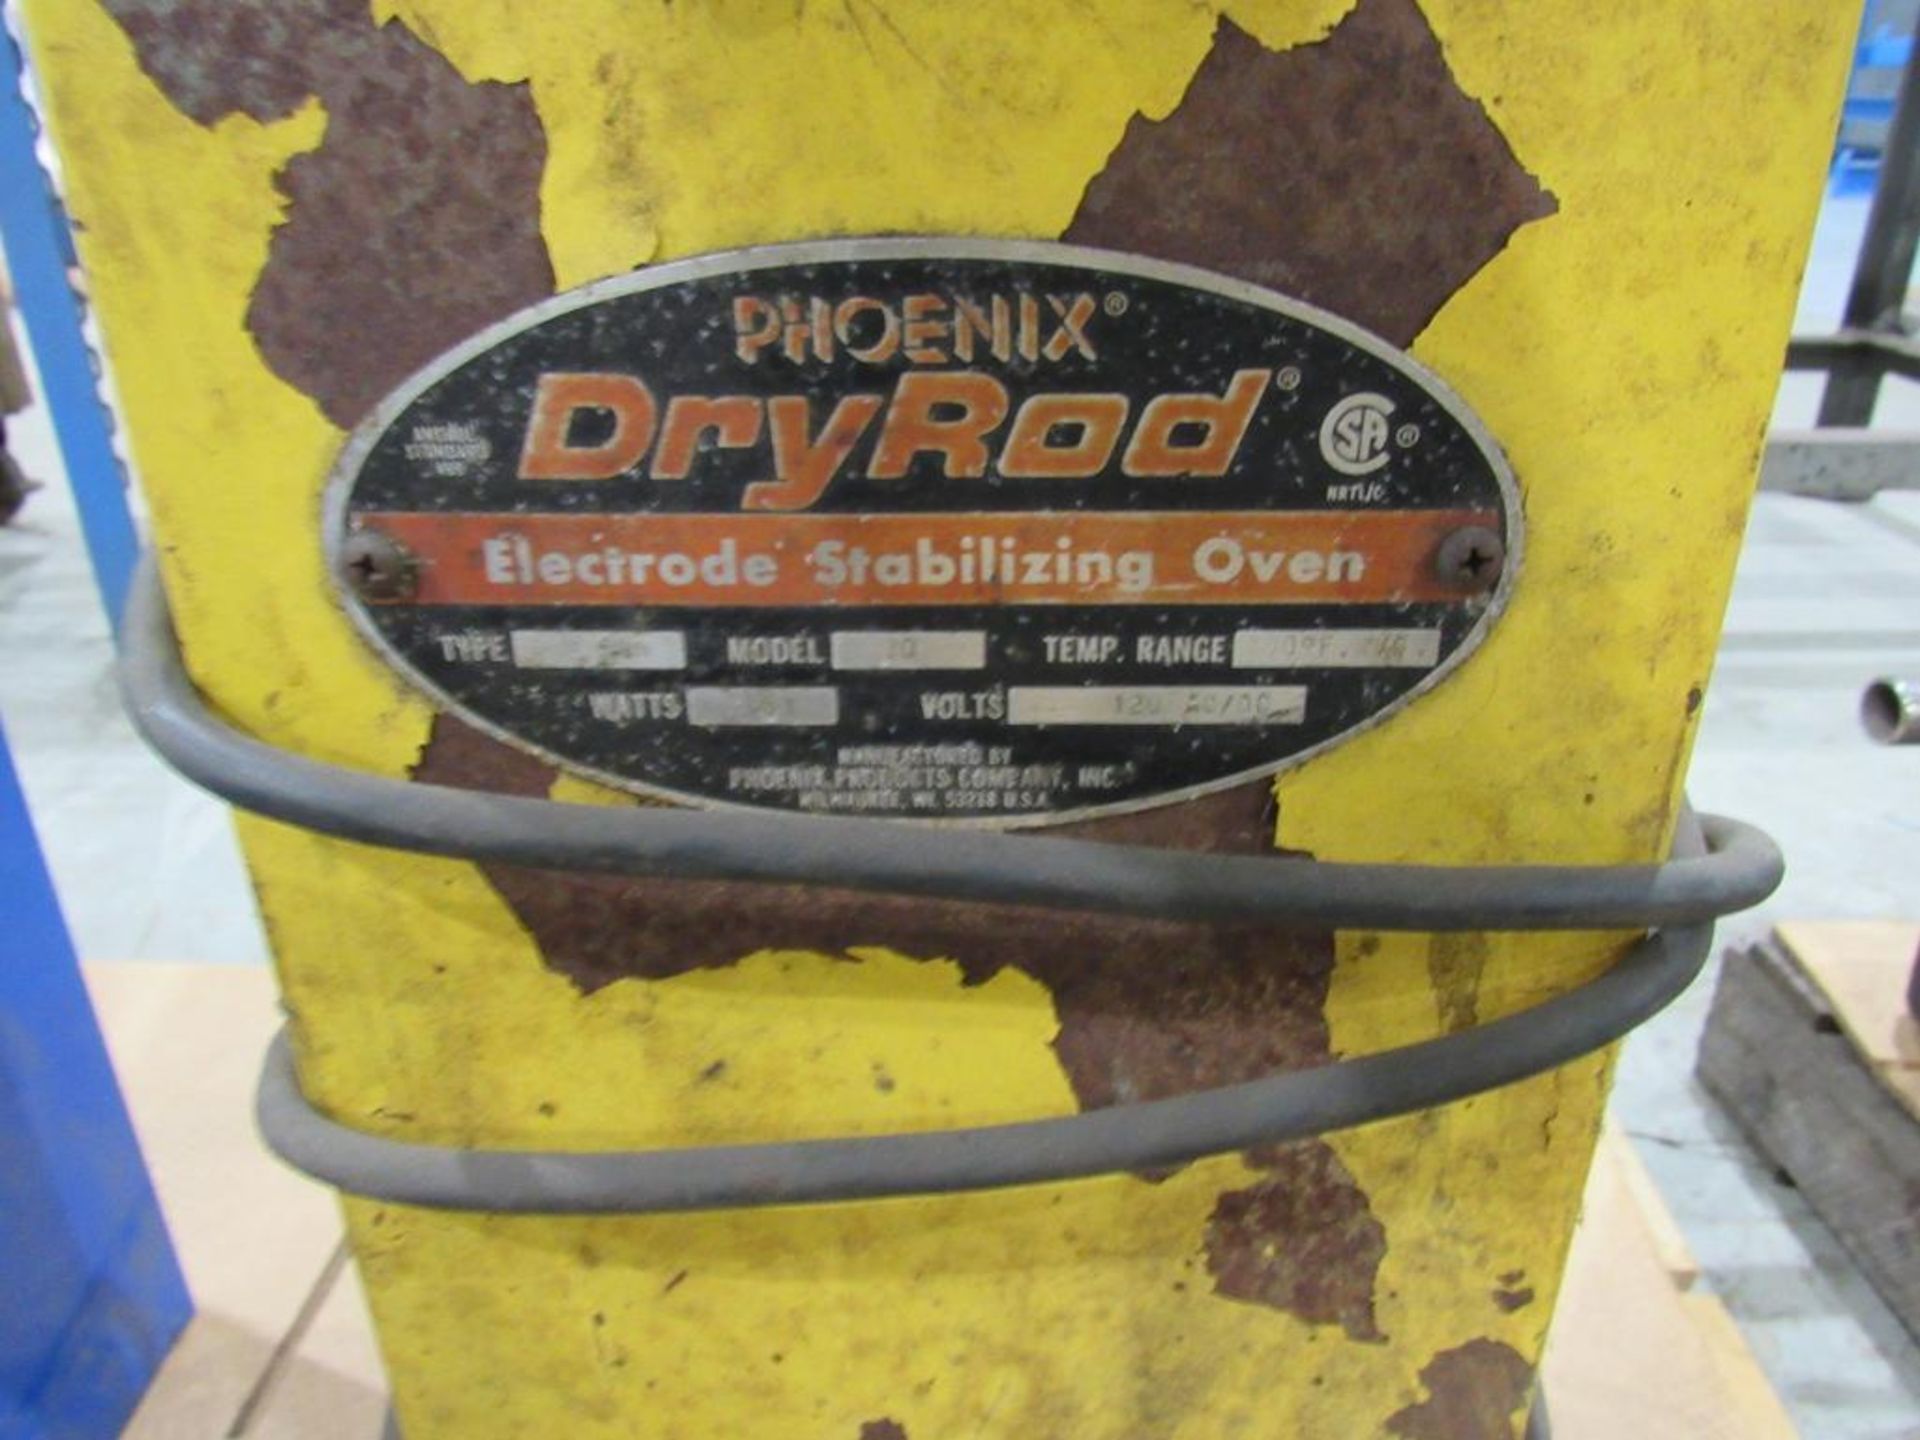 Phoenix Dry Rod Electrode Stabilizing Oven, Model 20 - Image 2 of 2